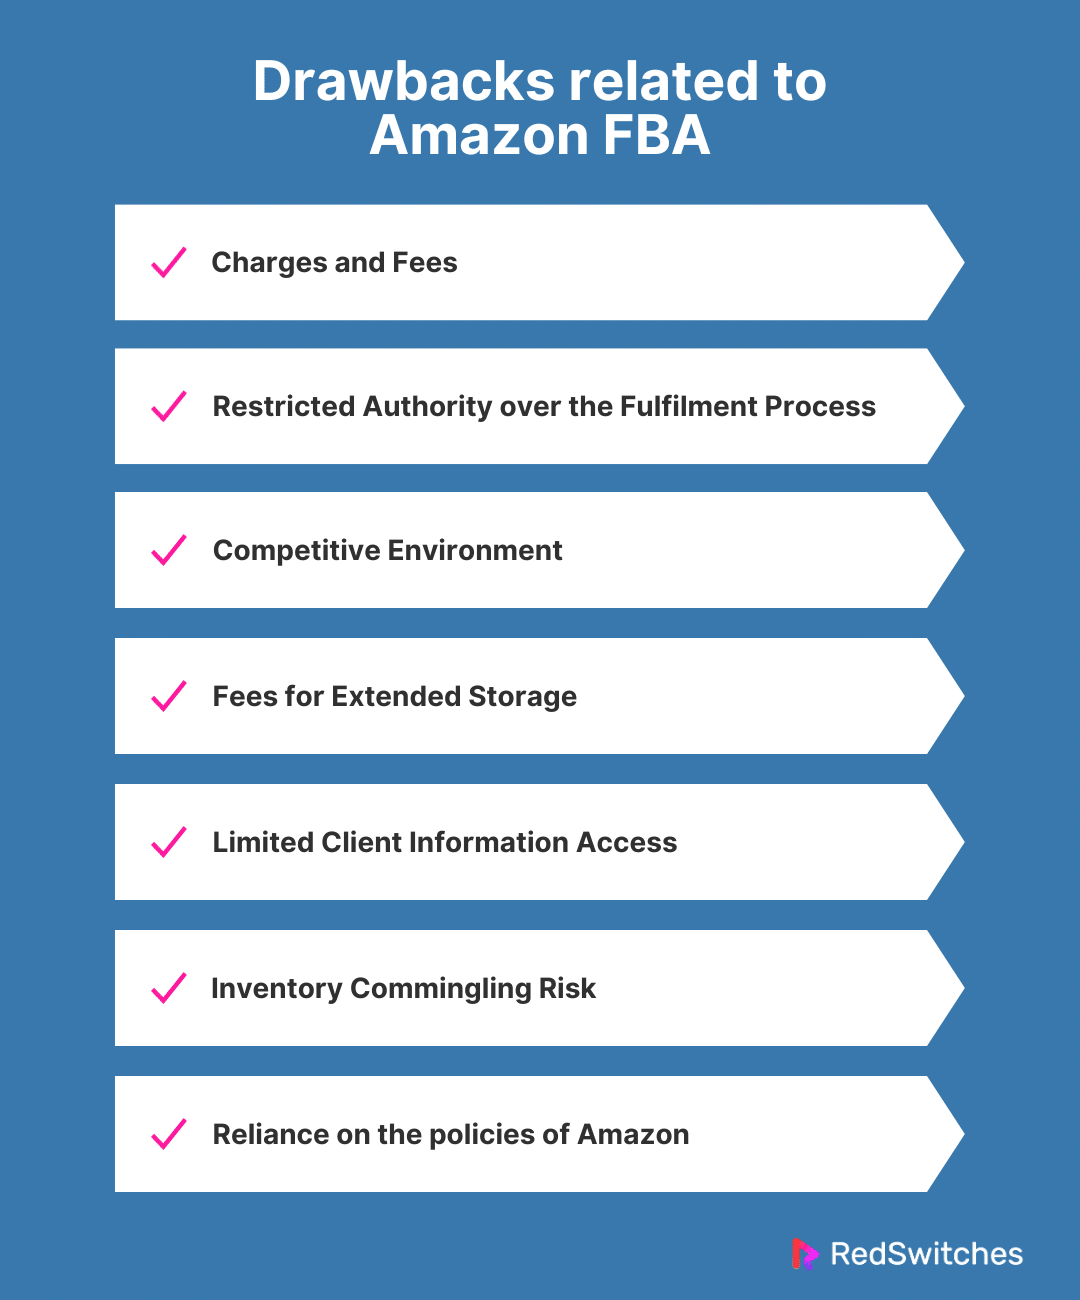 Drawbacks related to Amazon FBA